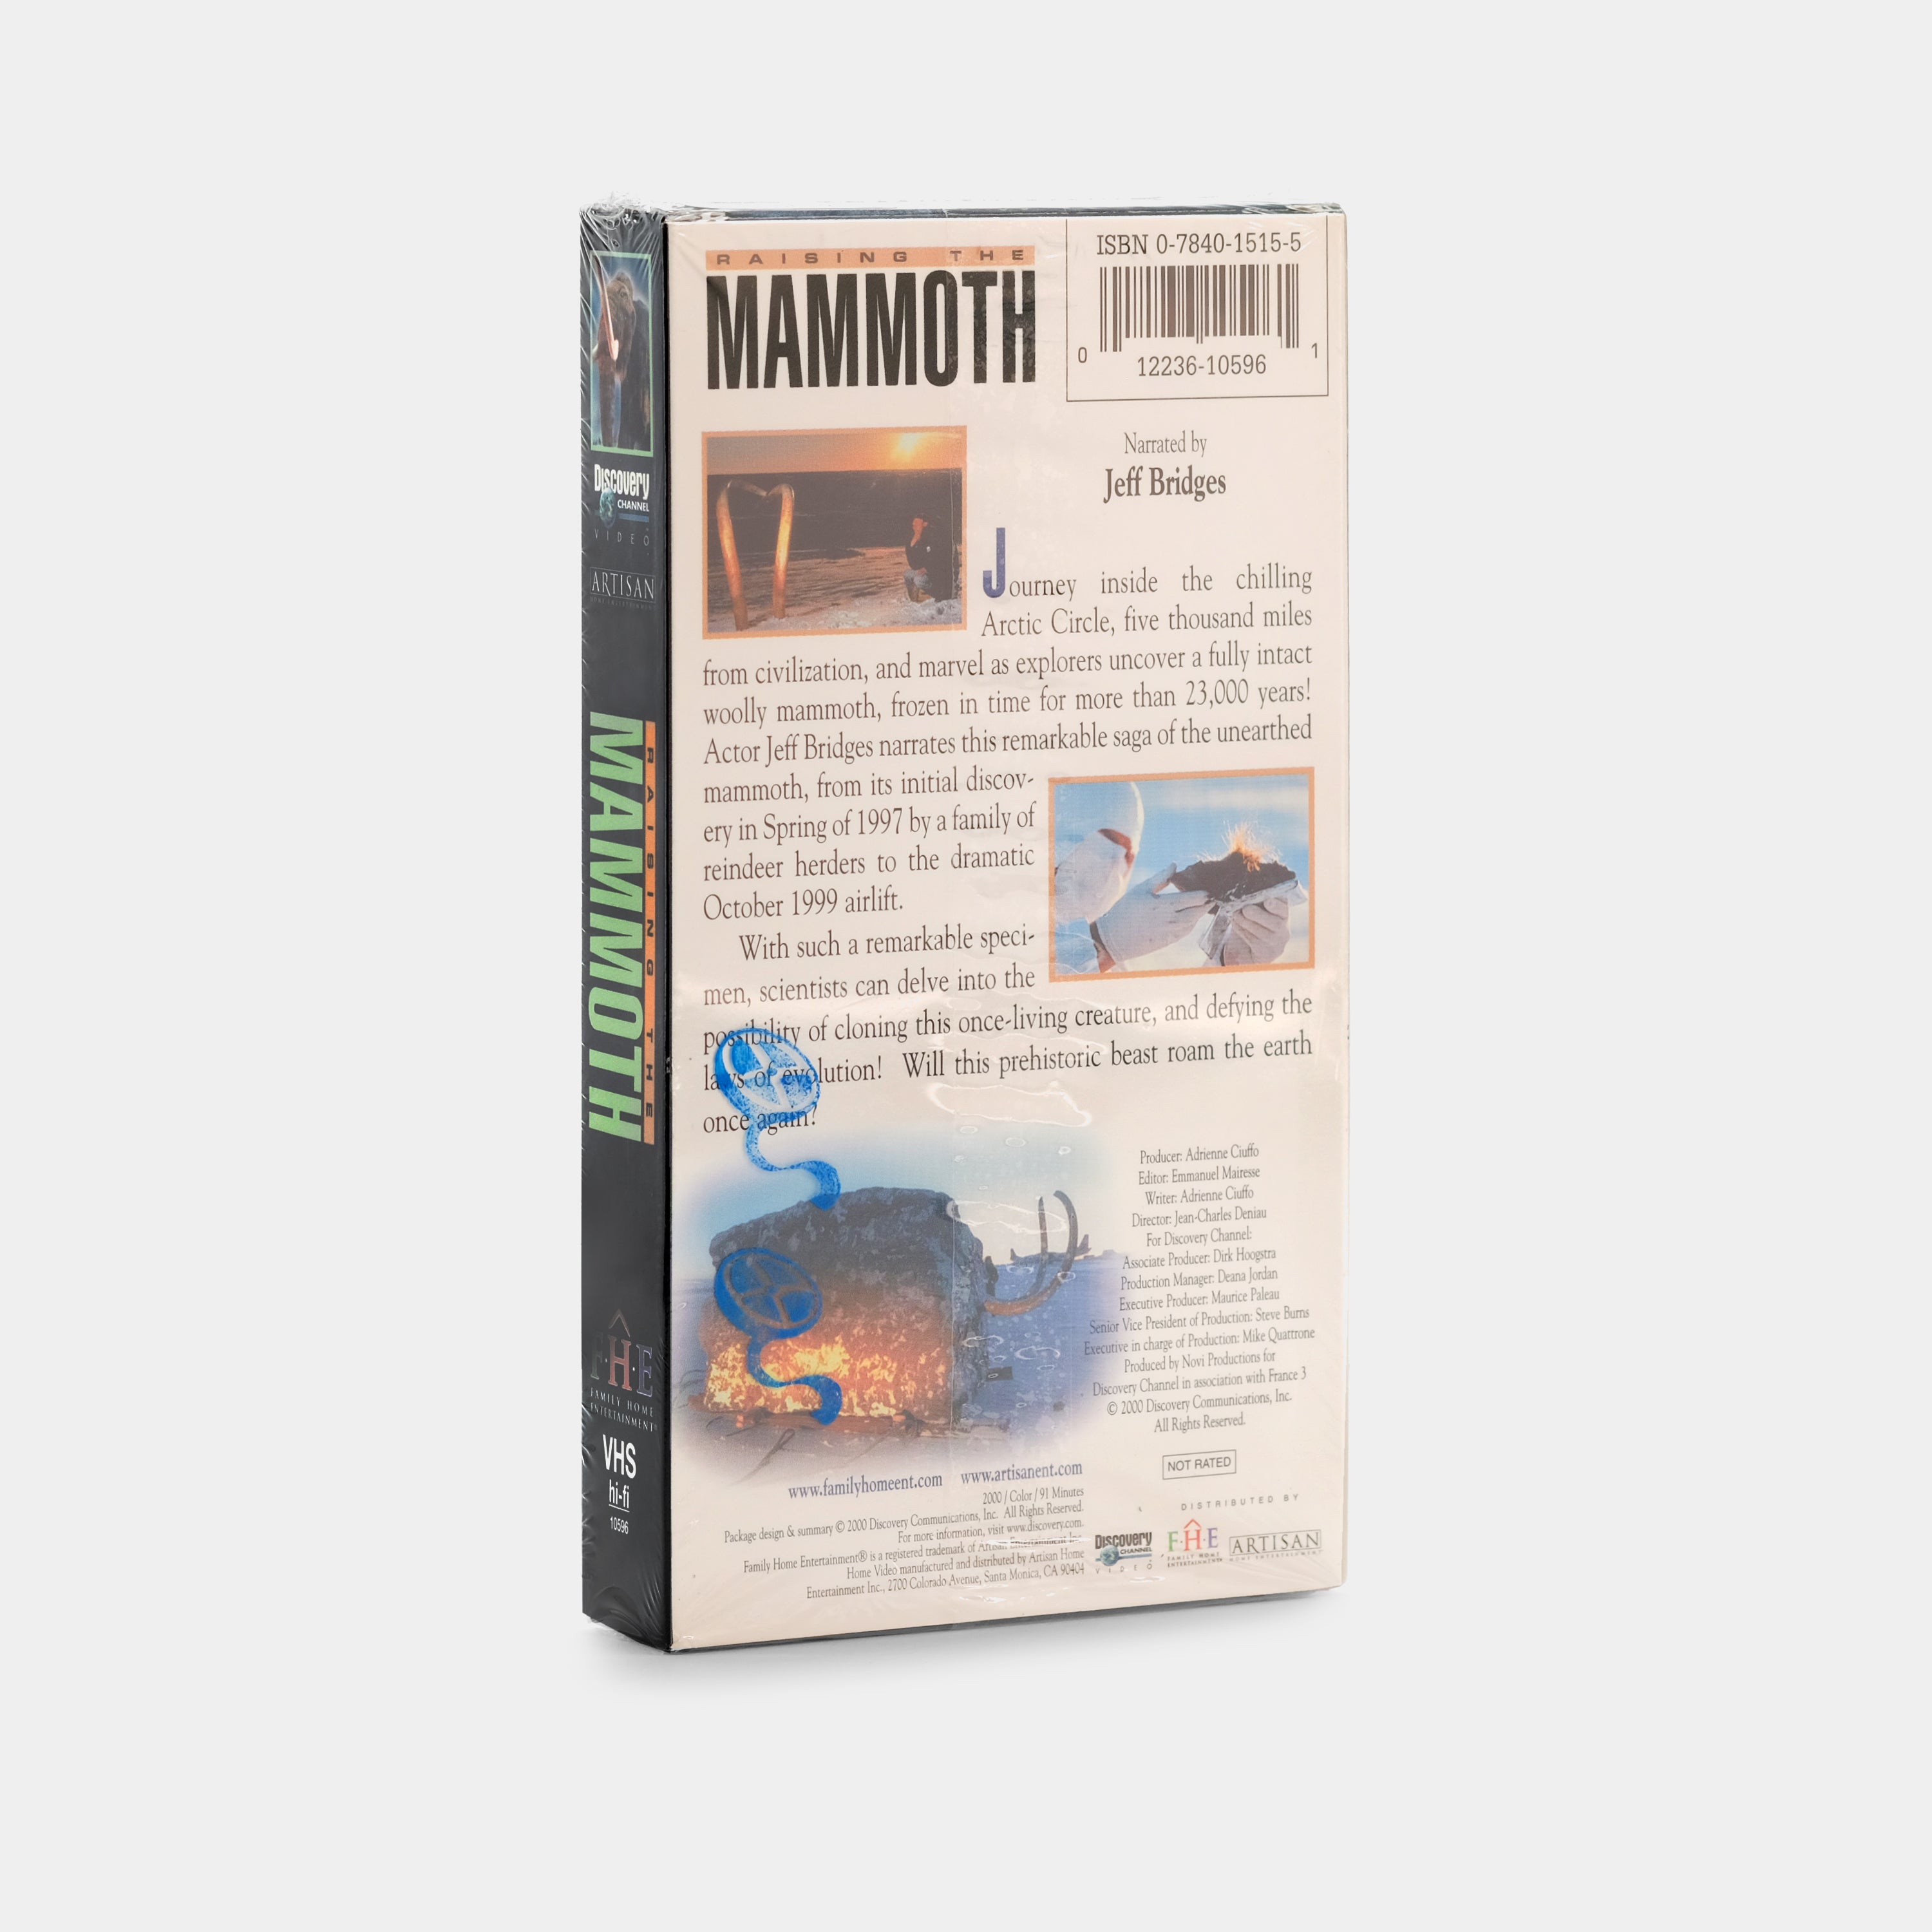 Raising the Mammoth (Sealed) VHS Tape